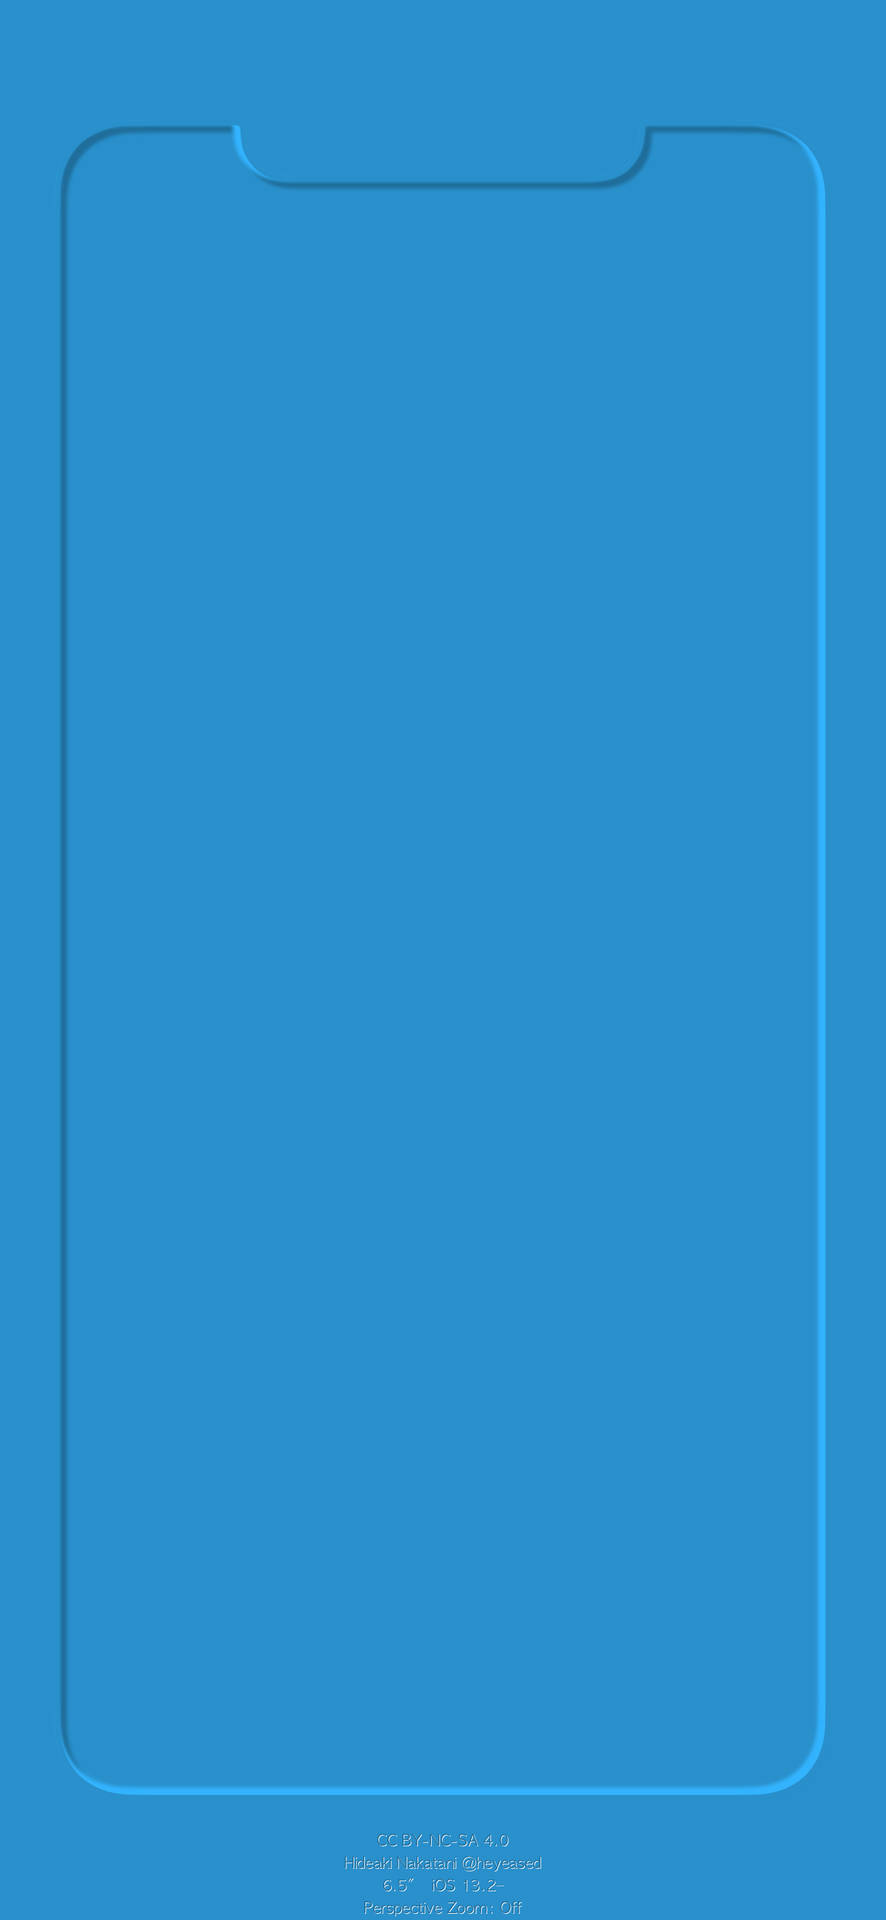 Download Outline 3d Blue Display Iphone Wallpaper | Wallpapers.com